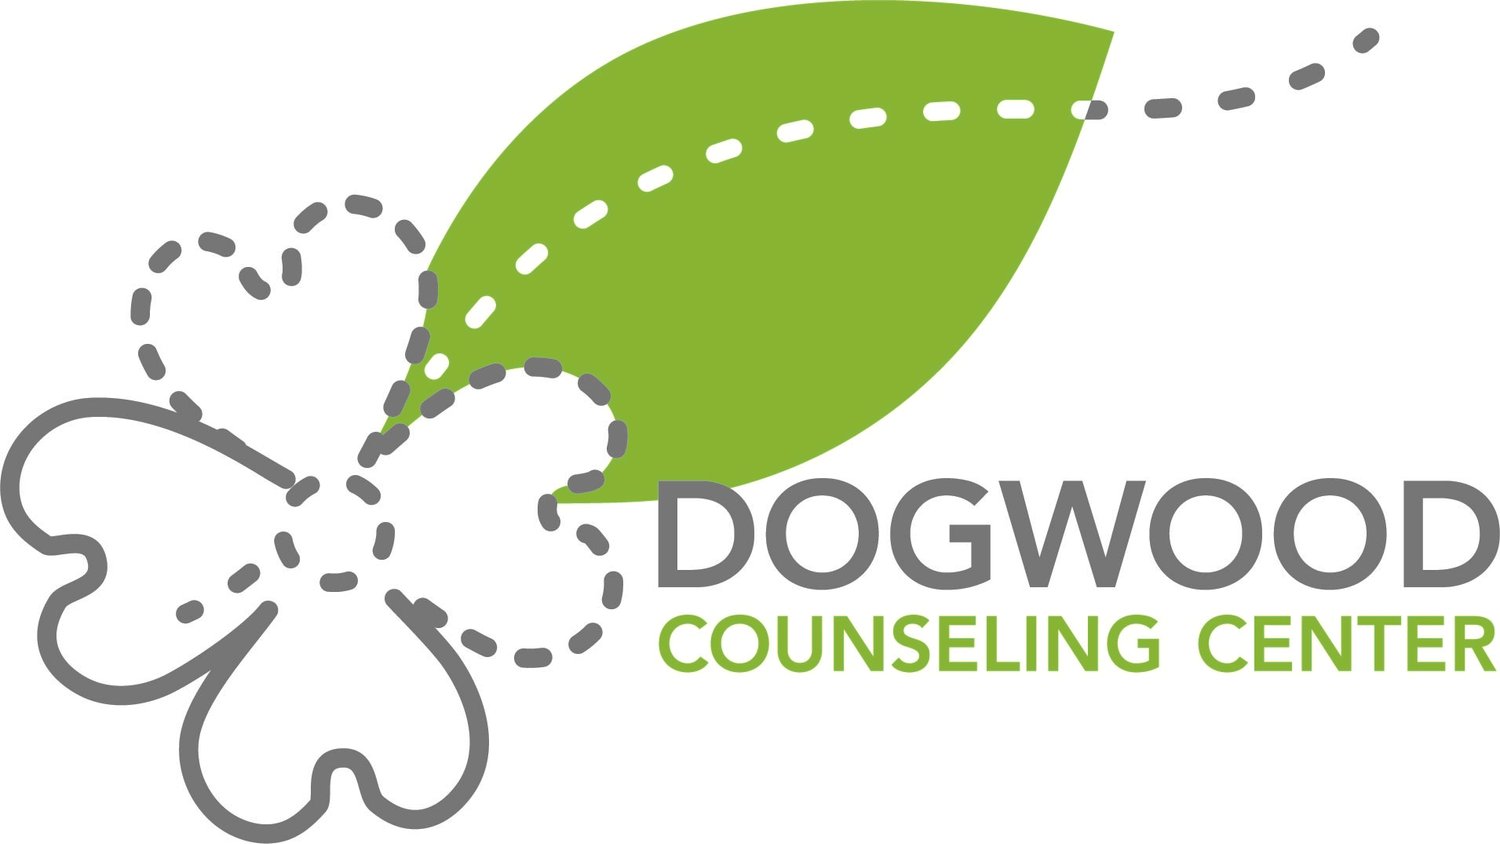 Dogwood Counseling Center